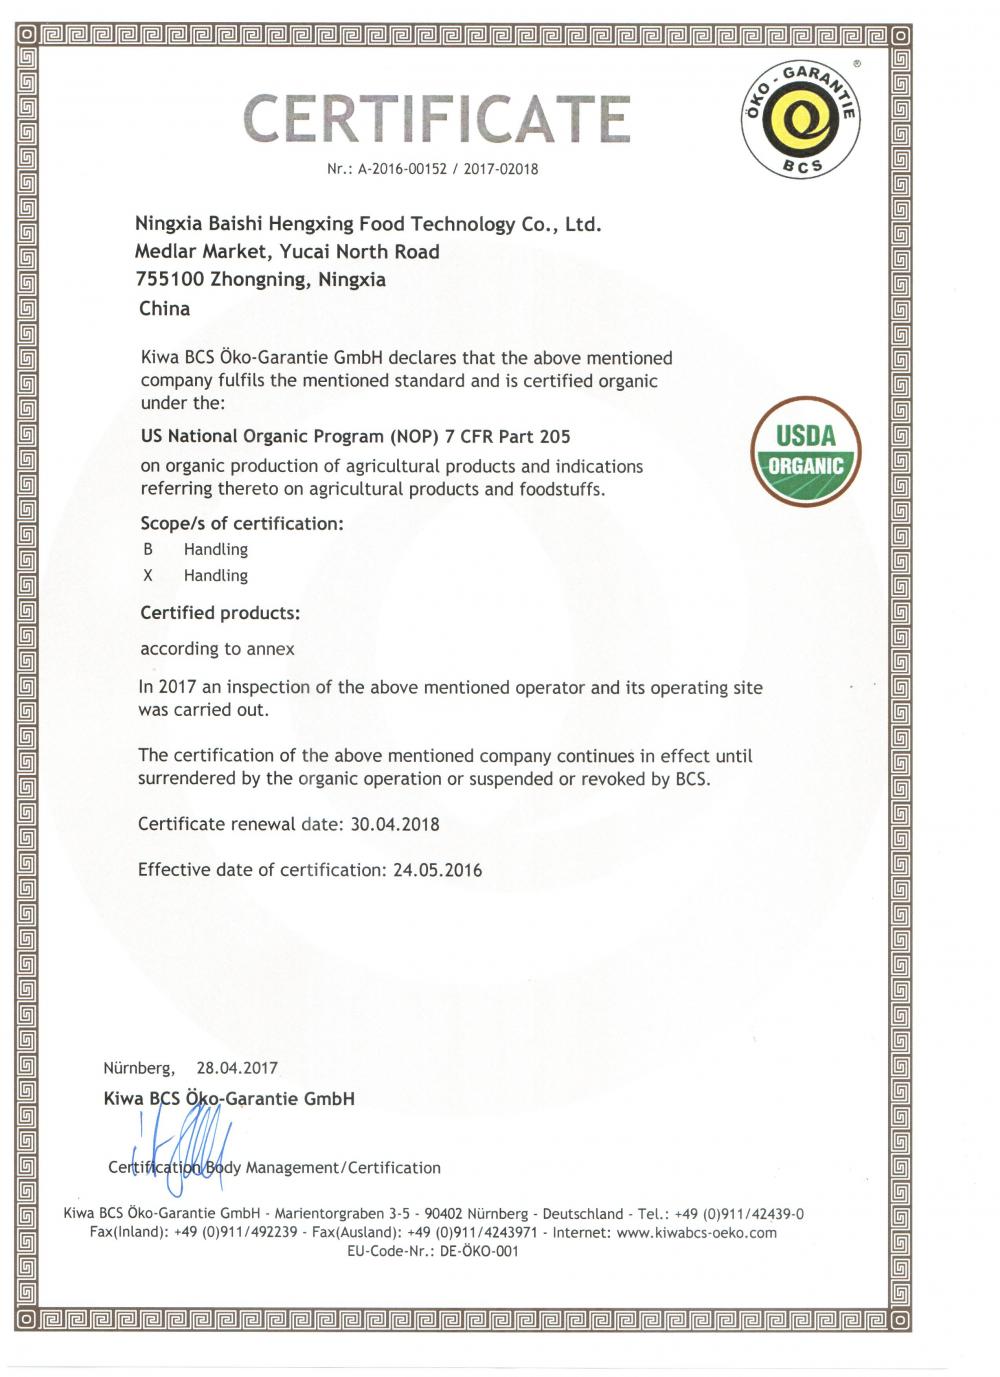 Organic Certificate-USDA 